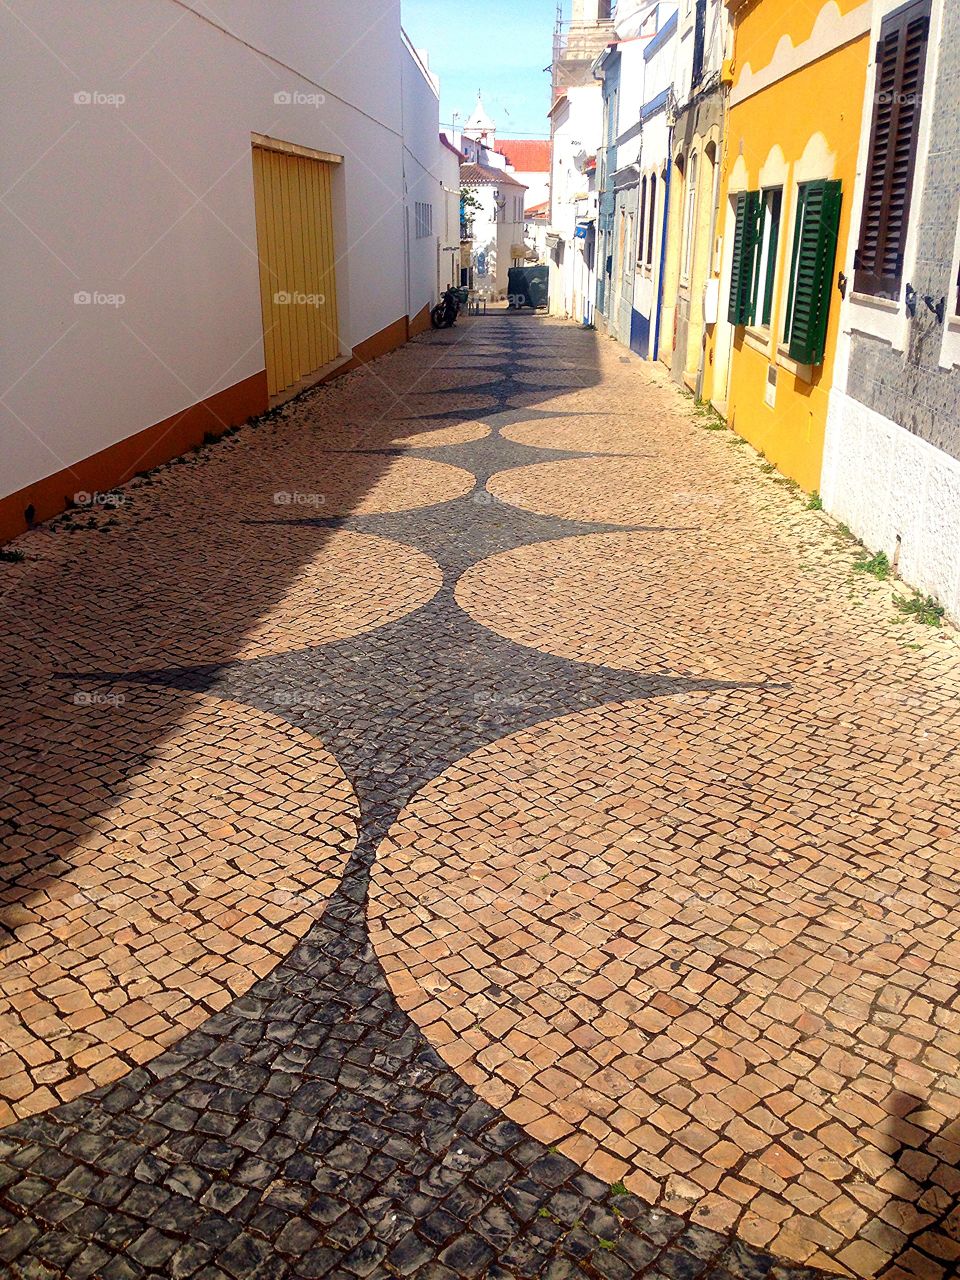 Portuguese pavement street